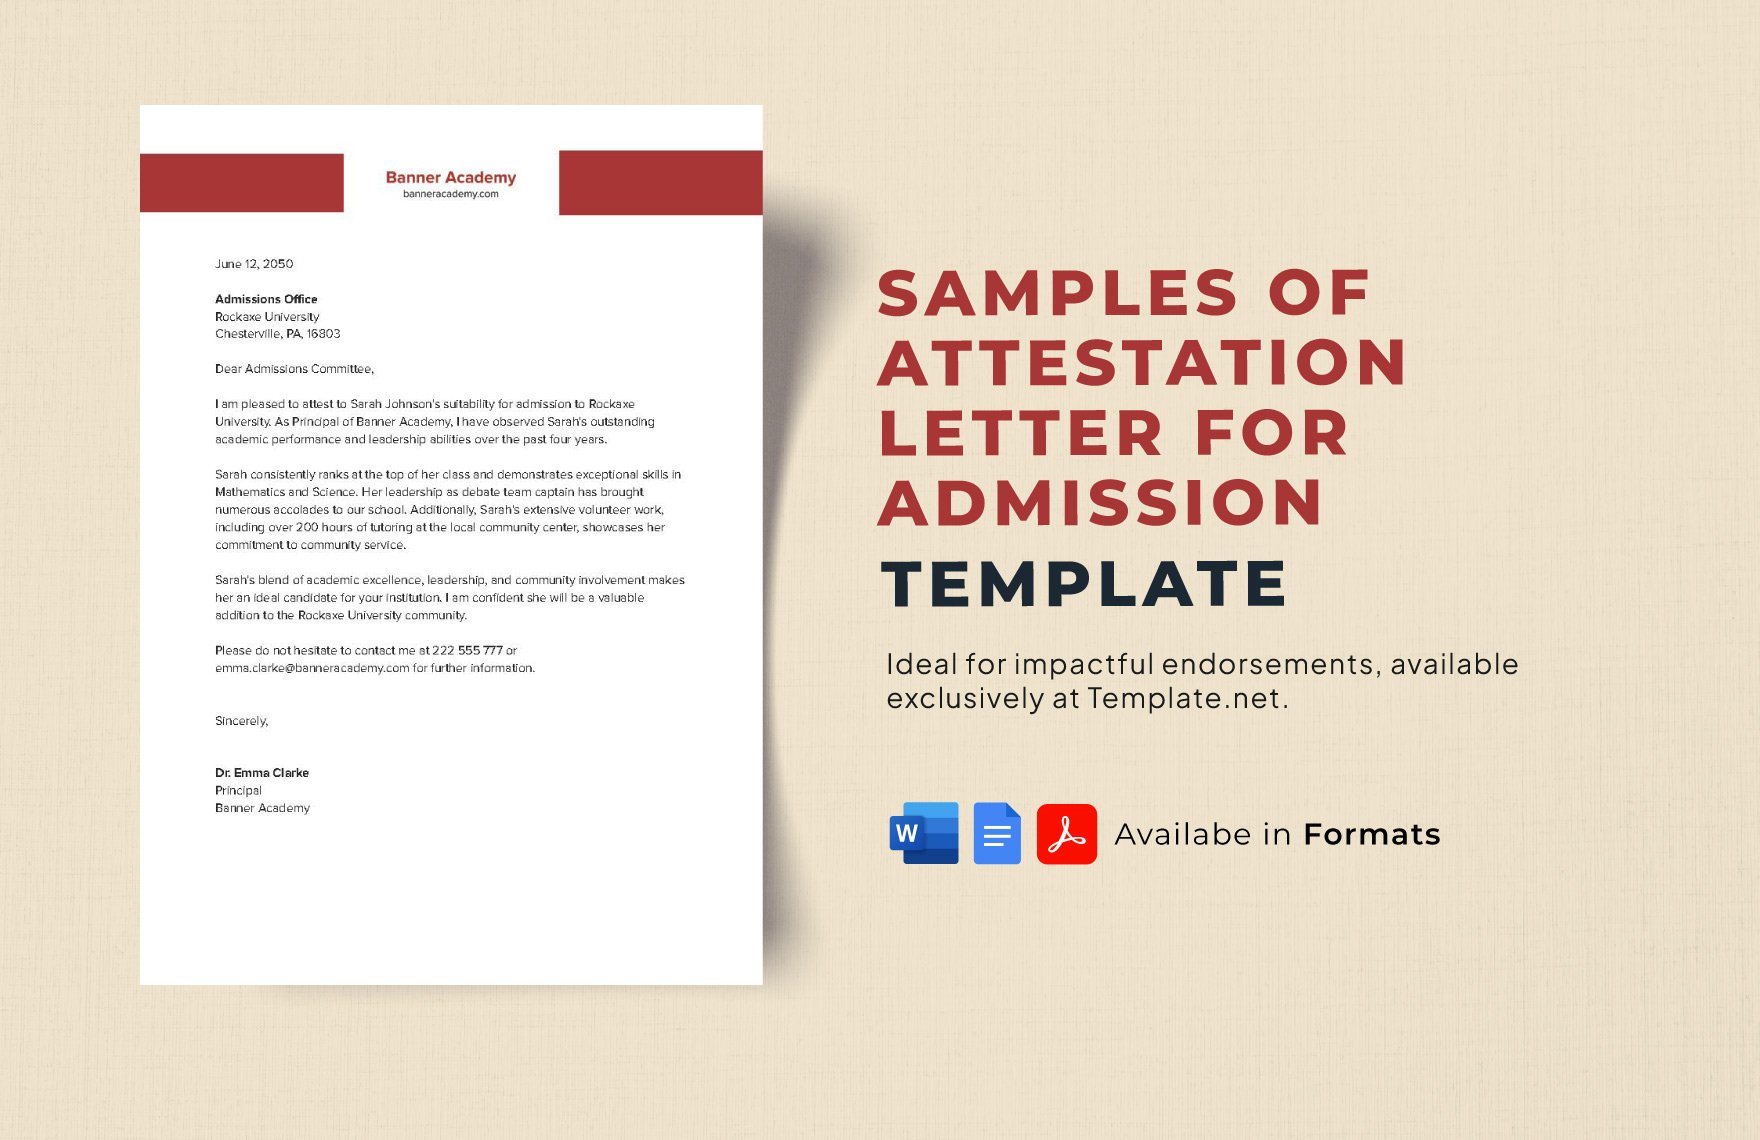 Samples of Attestation Letter for Admission Template